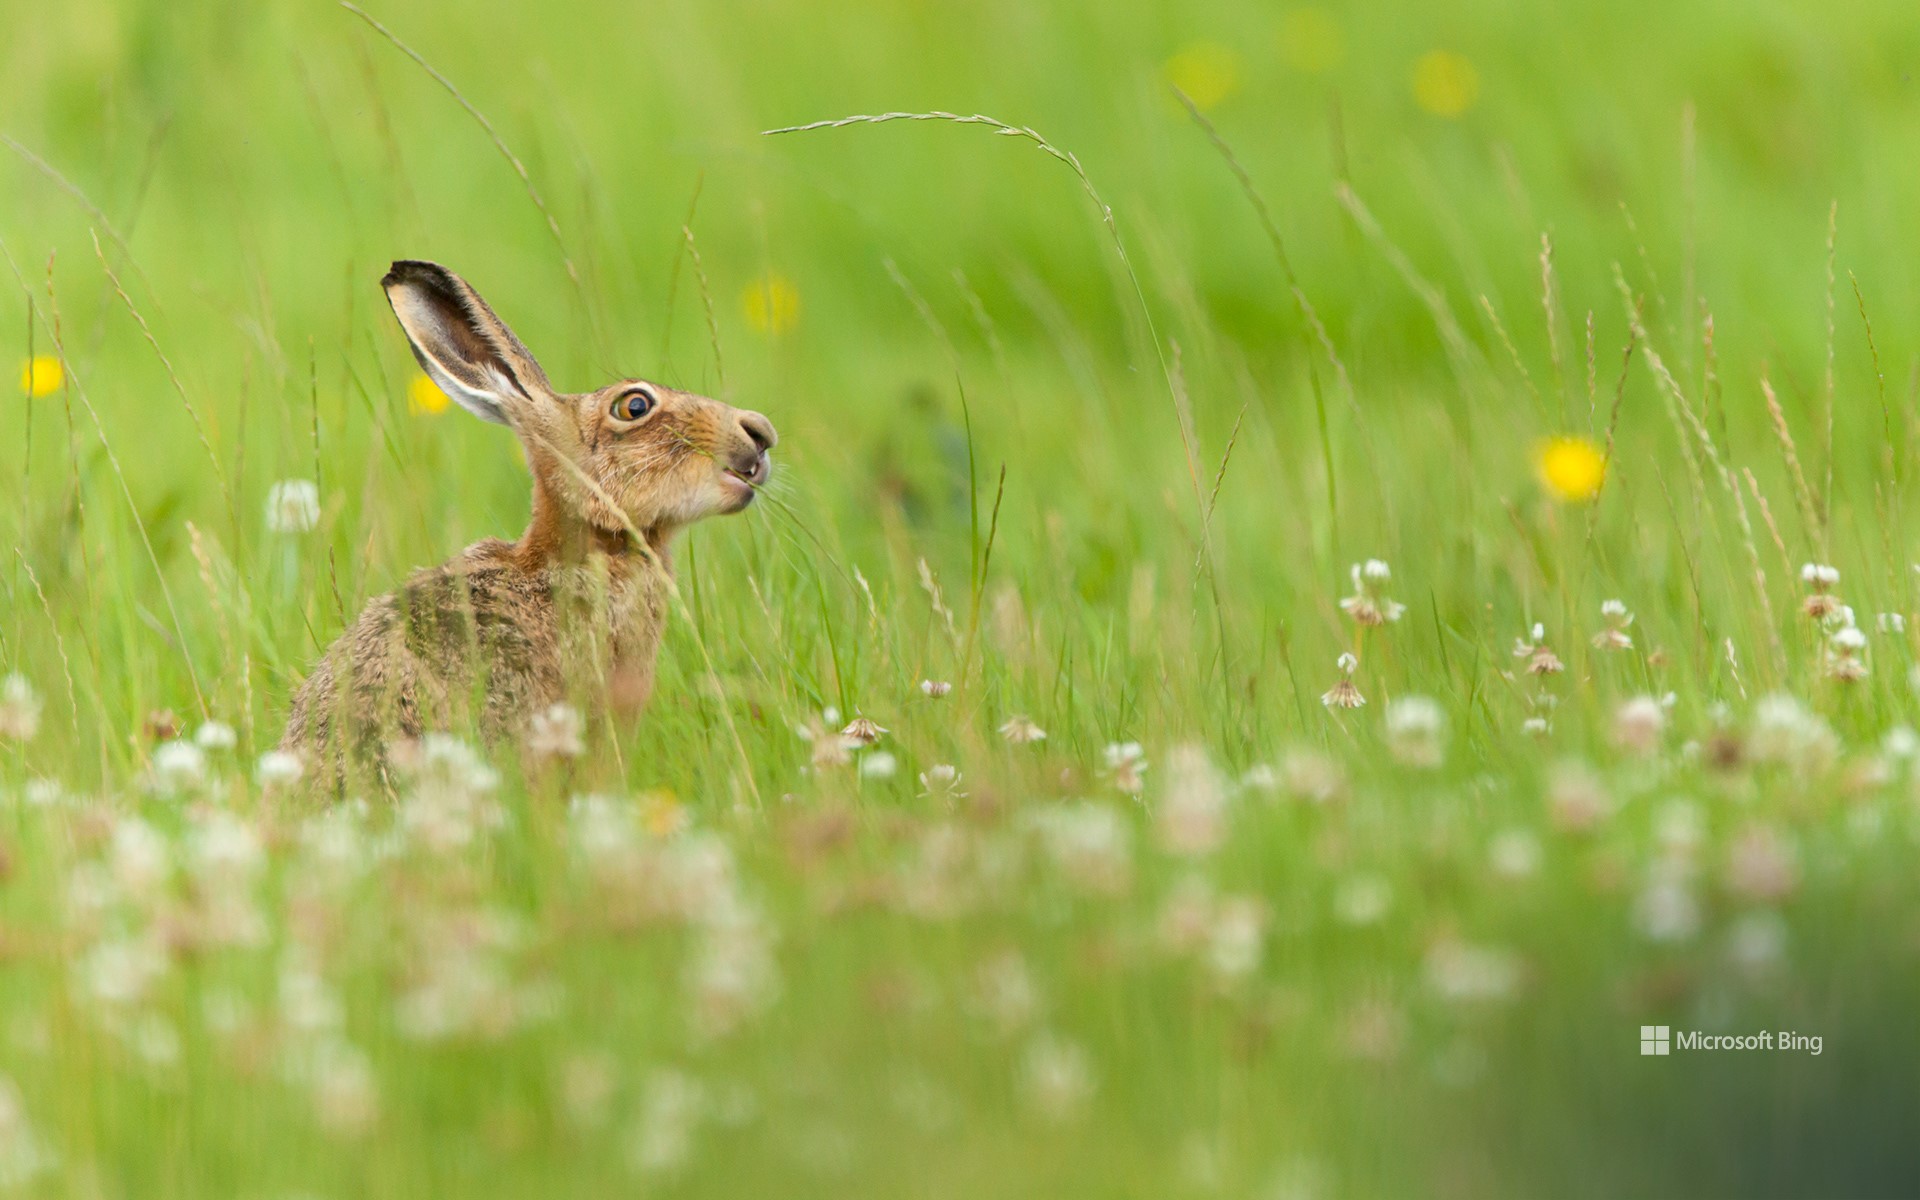 European hare, West Midlands, England